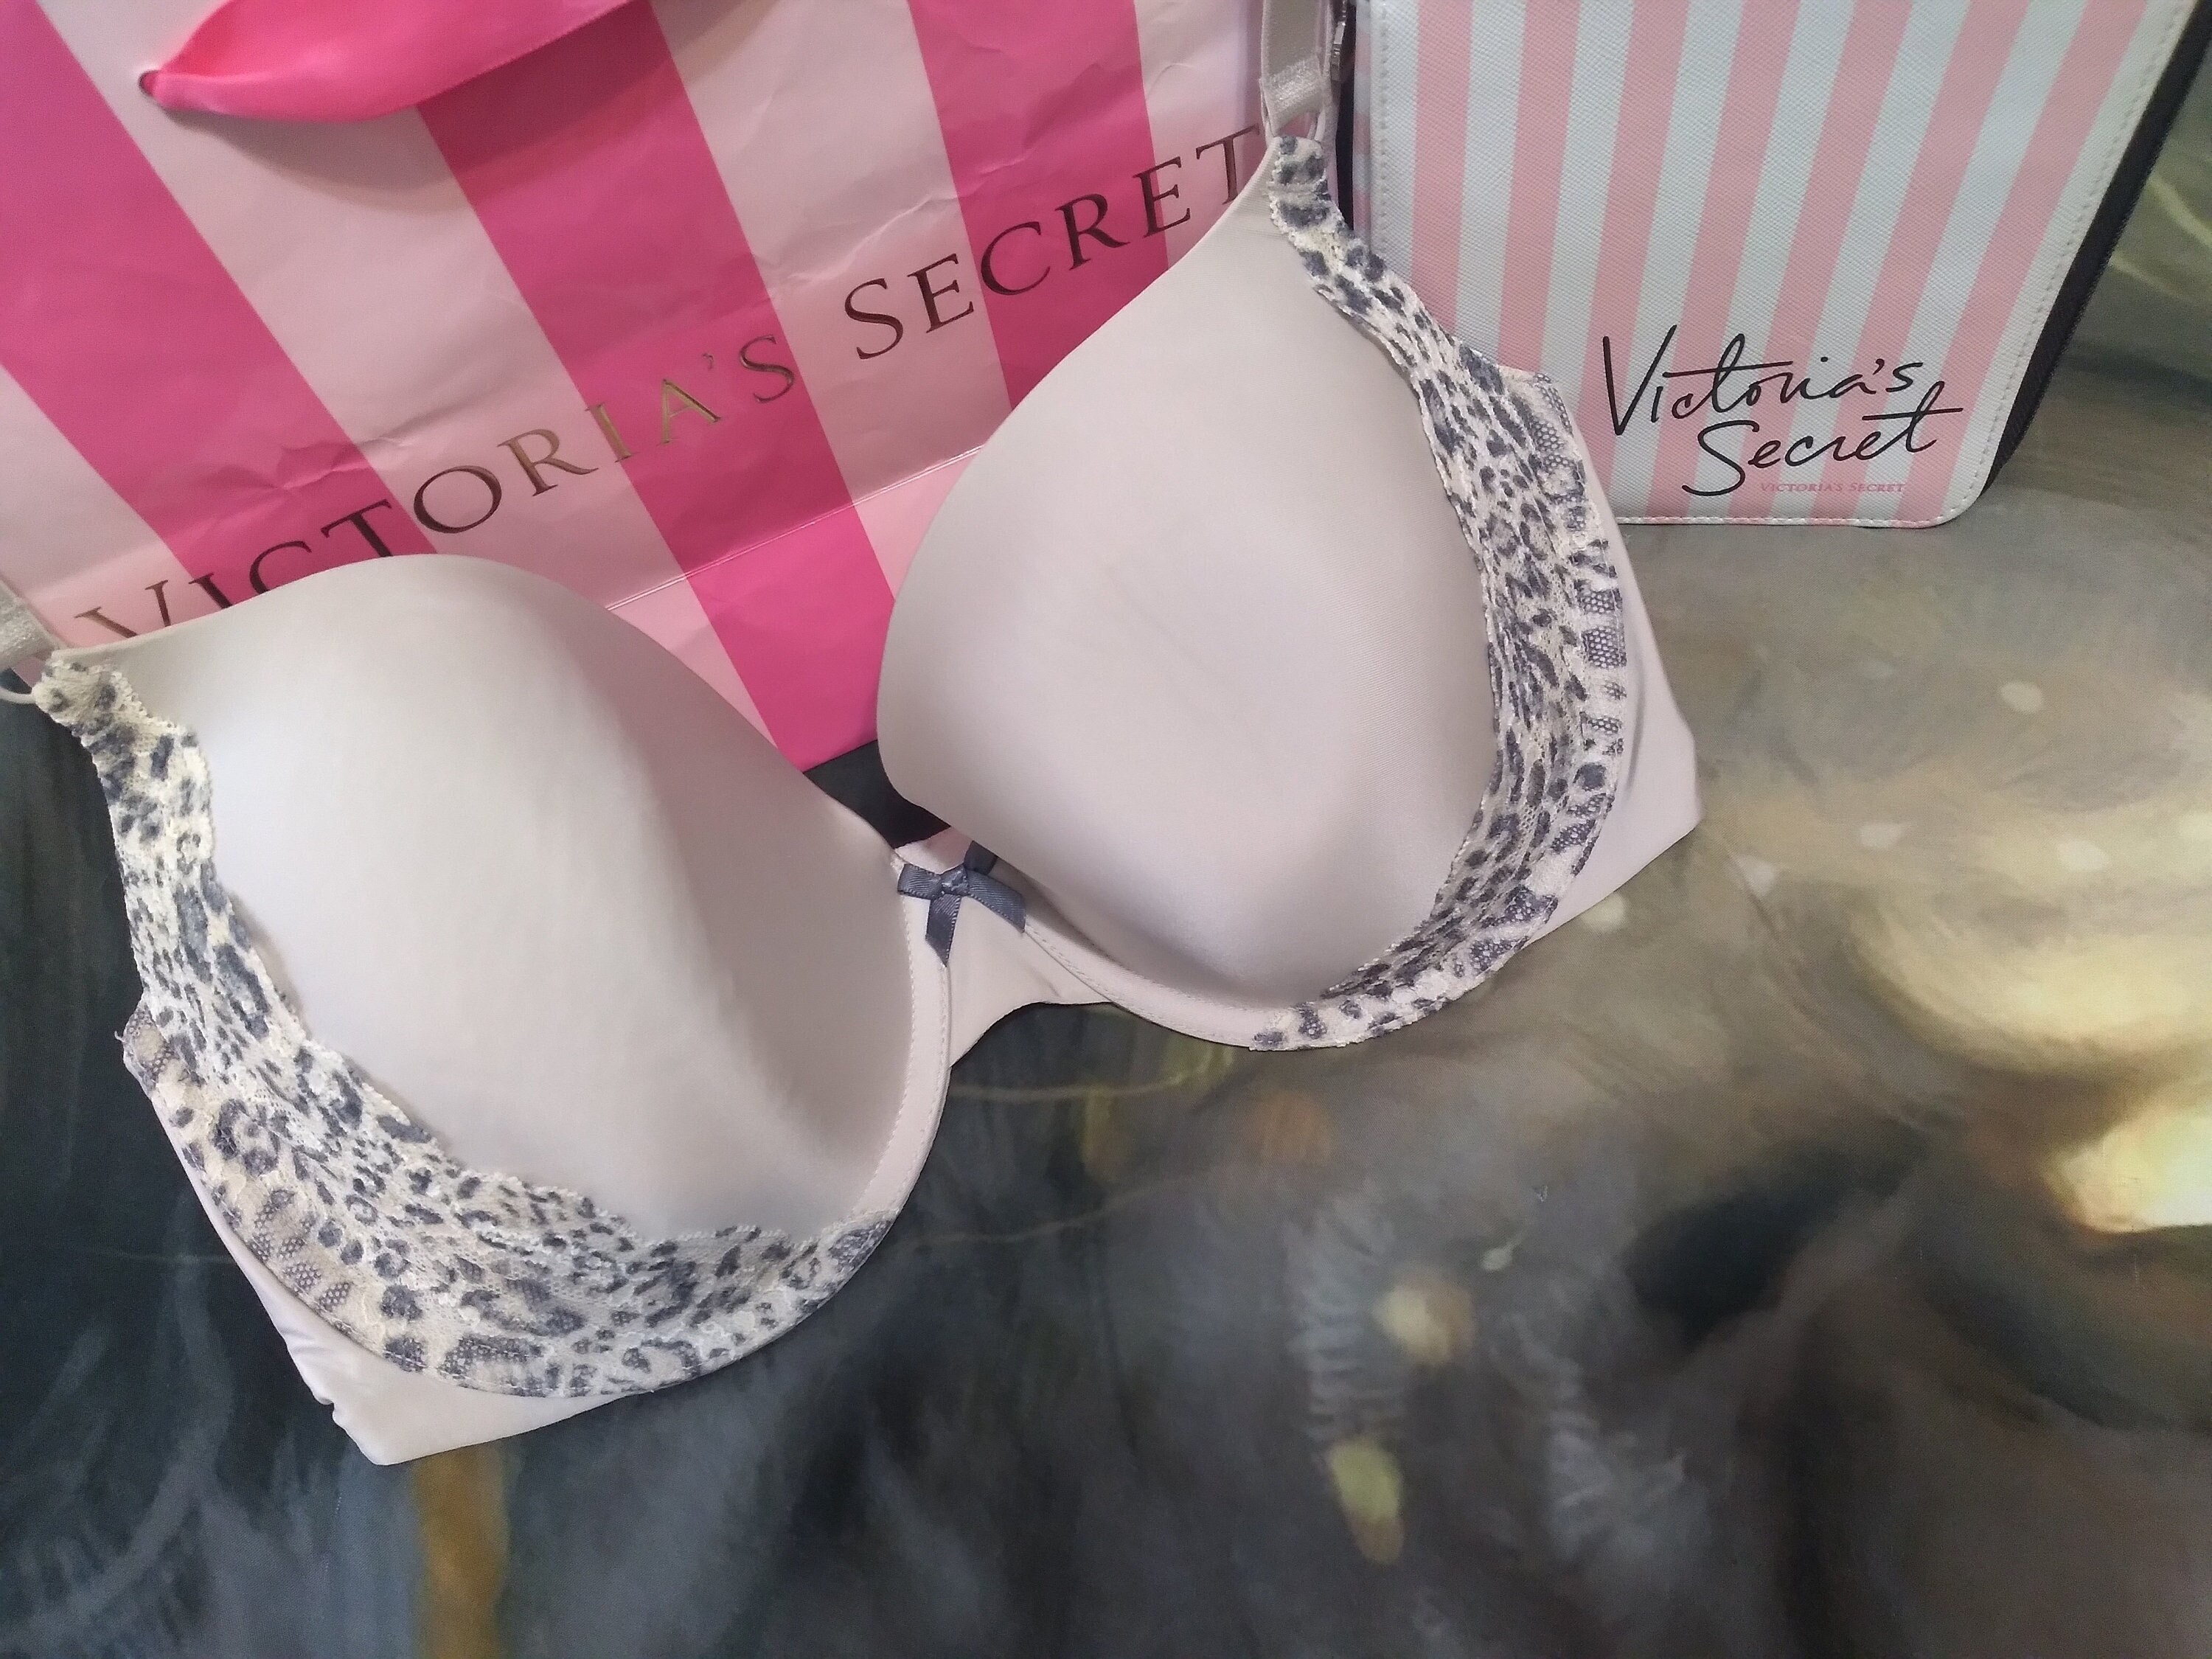 Victoria's Secret, Intimates & Sleepwear, Victorias Secret Dream Angels  Floral Lace Mesh Racerback Bra 36ddd